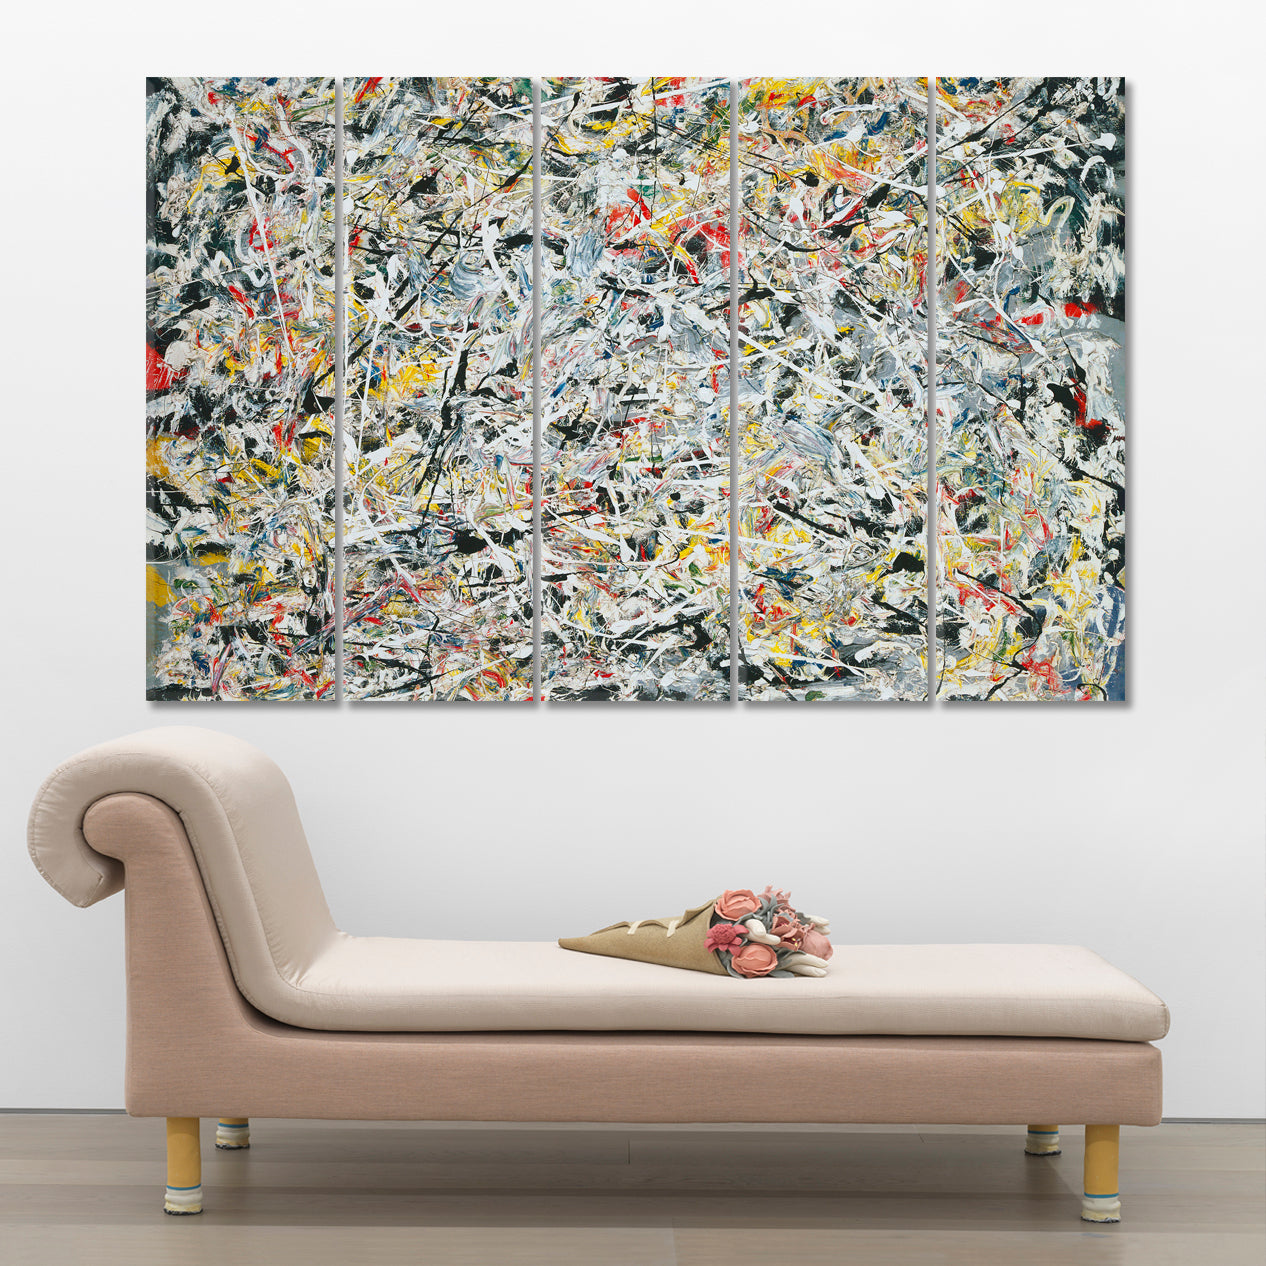 Splatter Abstract Painting Jackson Pollock Style Abstract Art Print Artesty 5 panels 36" x 24" 